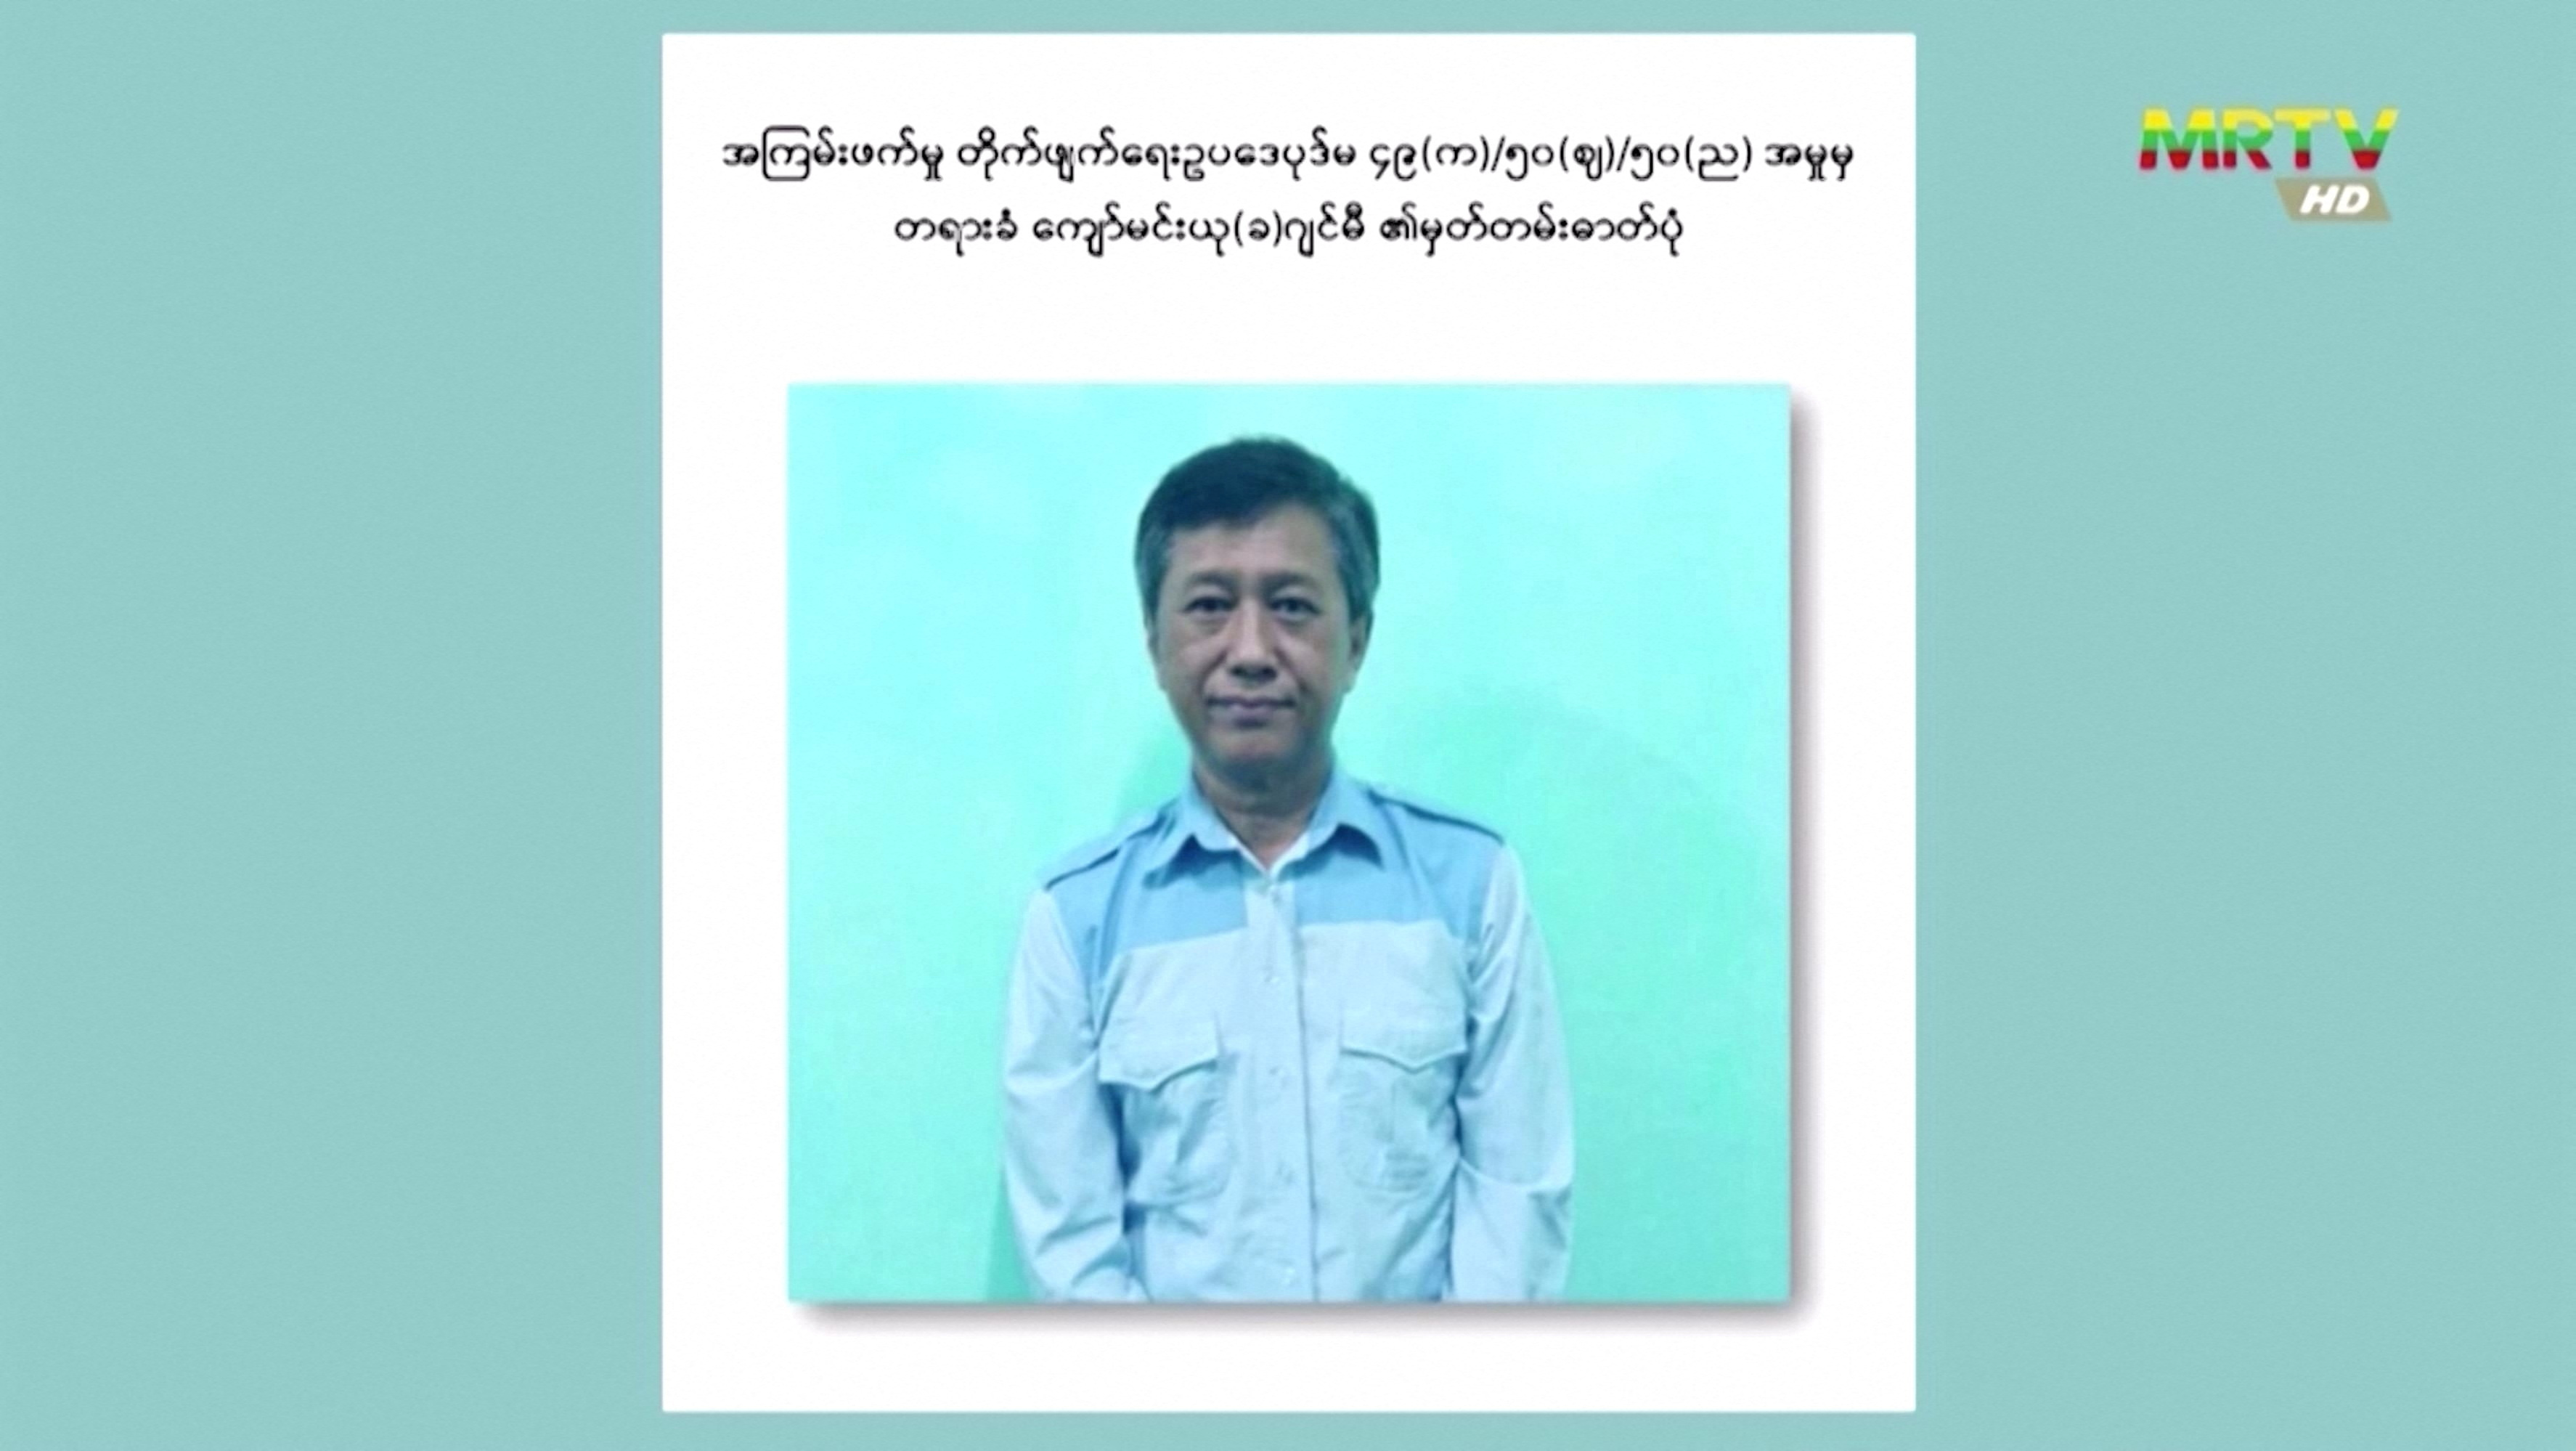 Myanmar junta executes four democracy activists